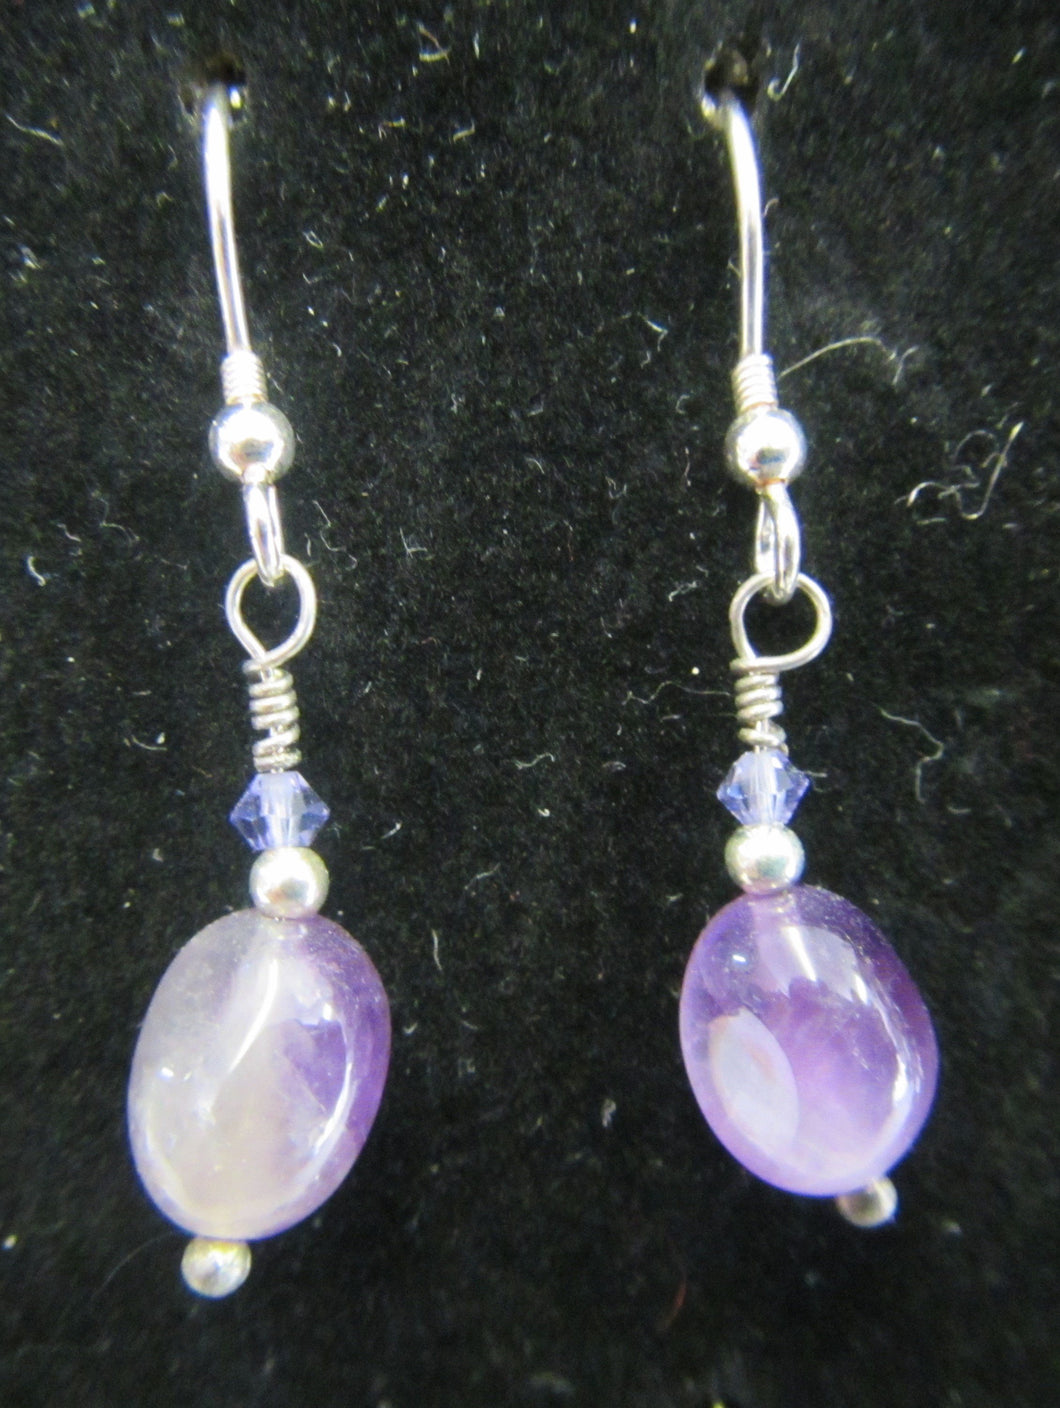 Handcrafted sterling silver purple stone earrings